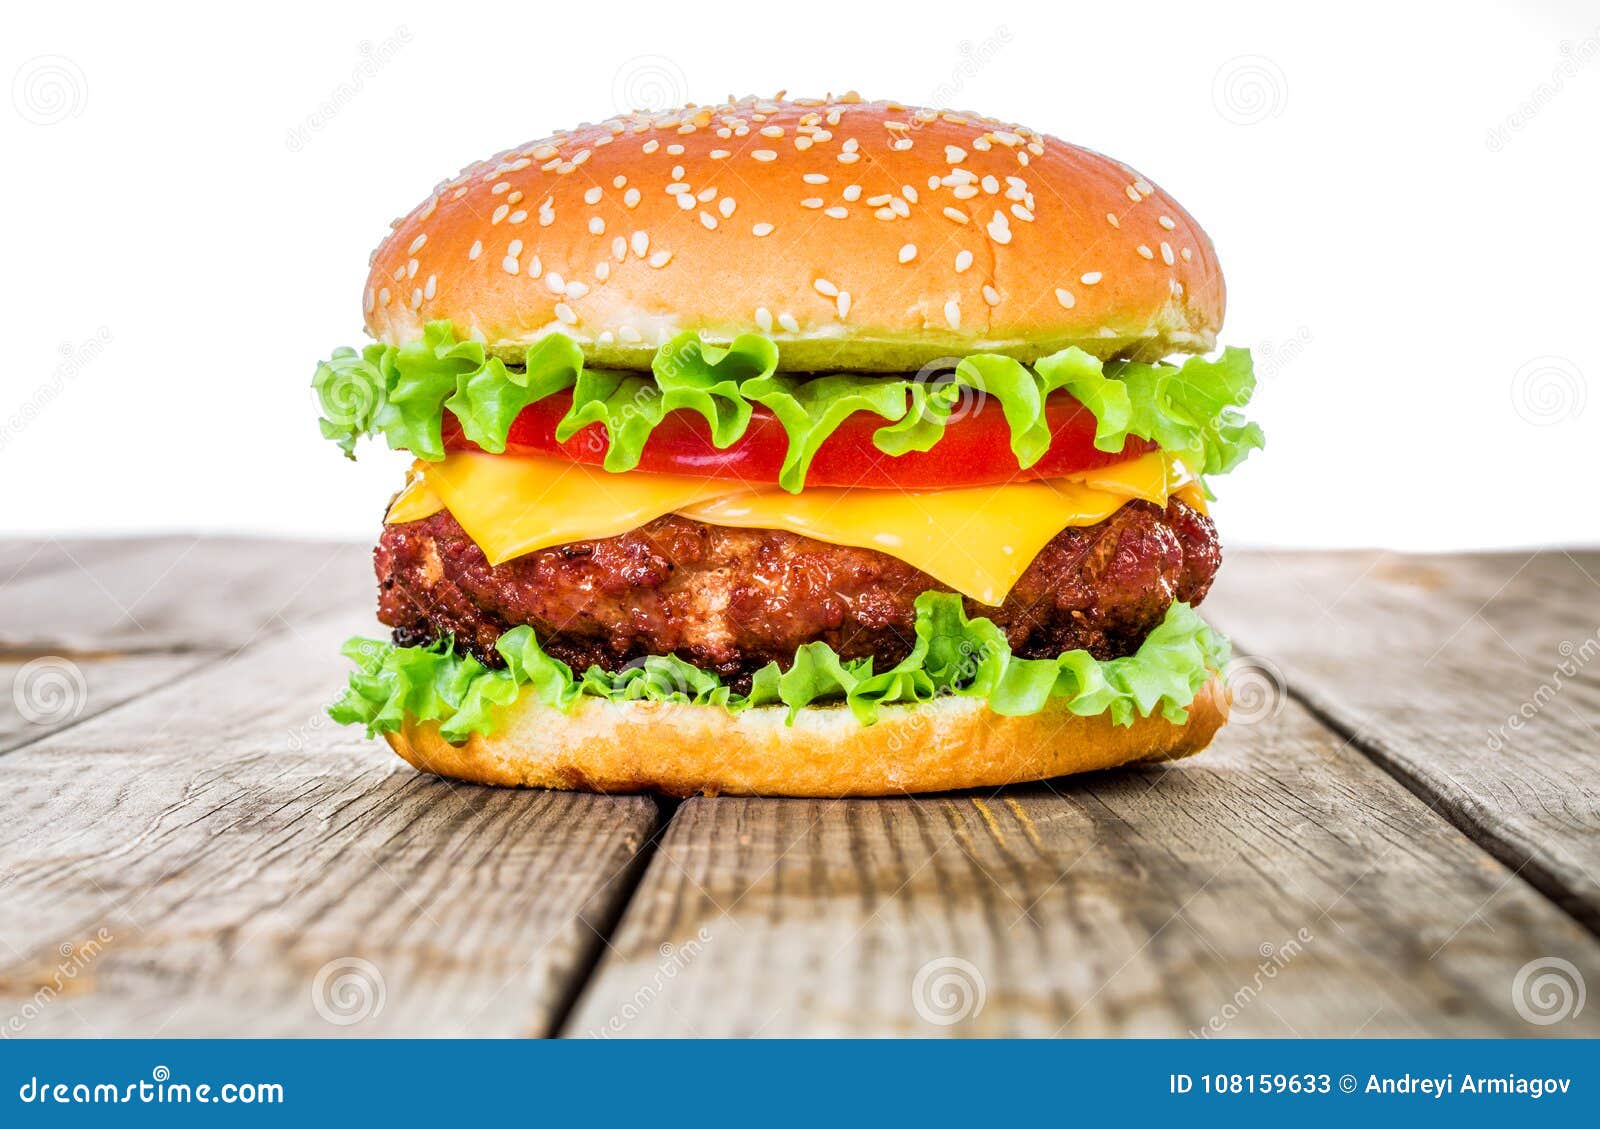 tasty and appetizing hamburger cheeseburger